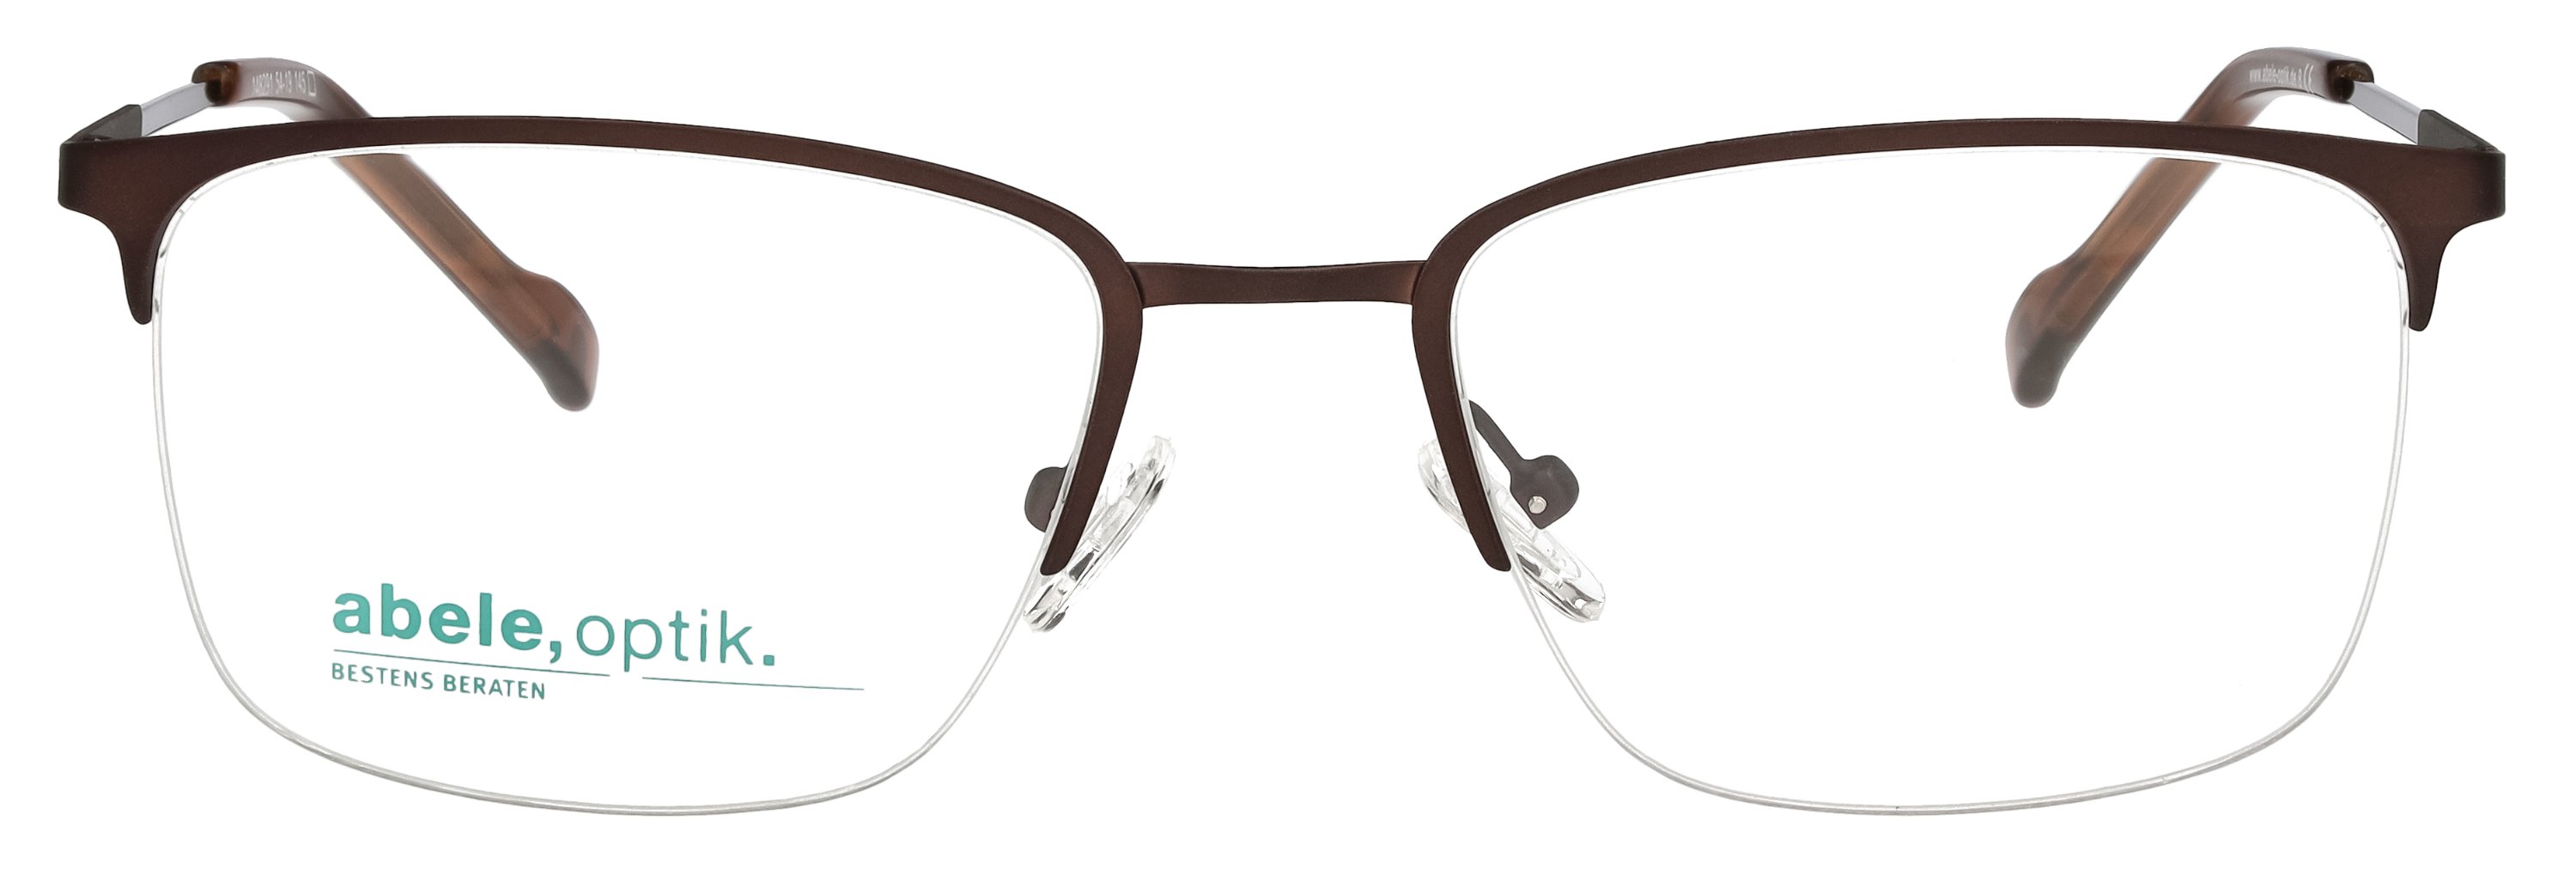 abele optik Brille für Herren in dunkelbraun matt Nylor 148291 